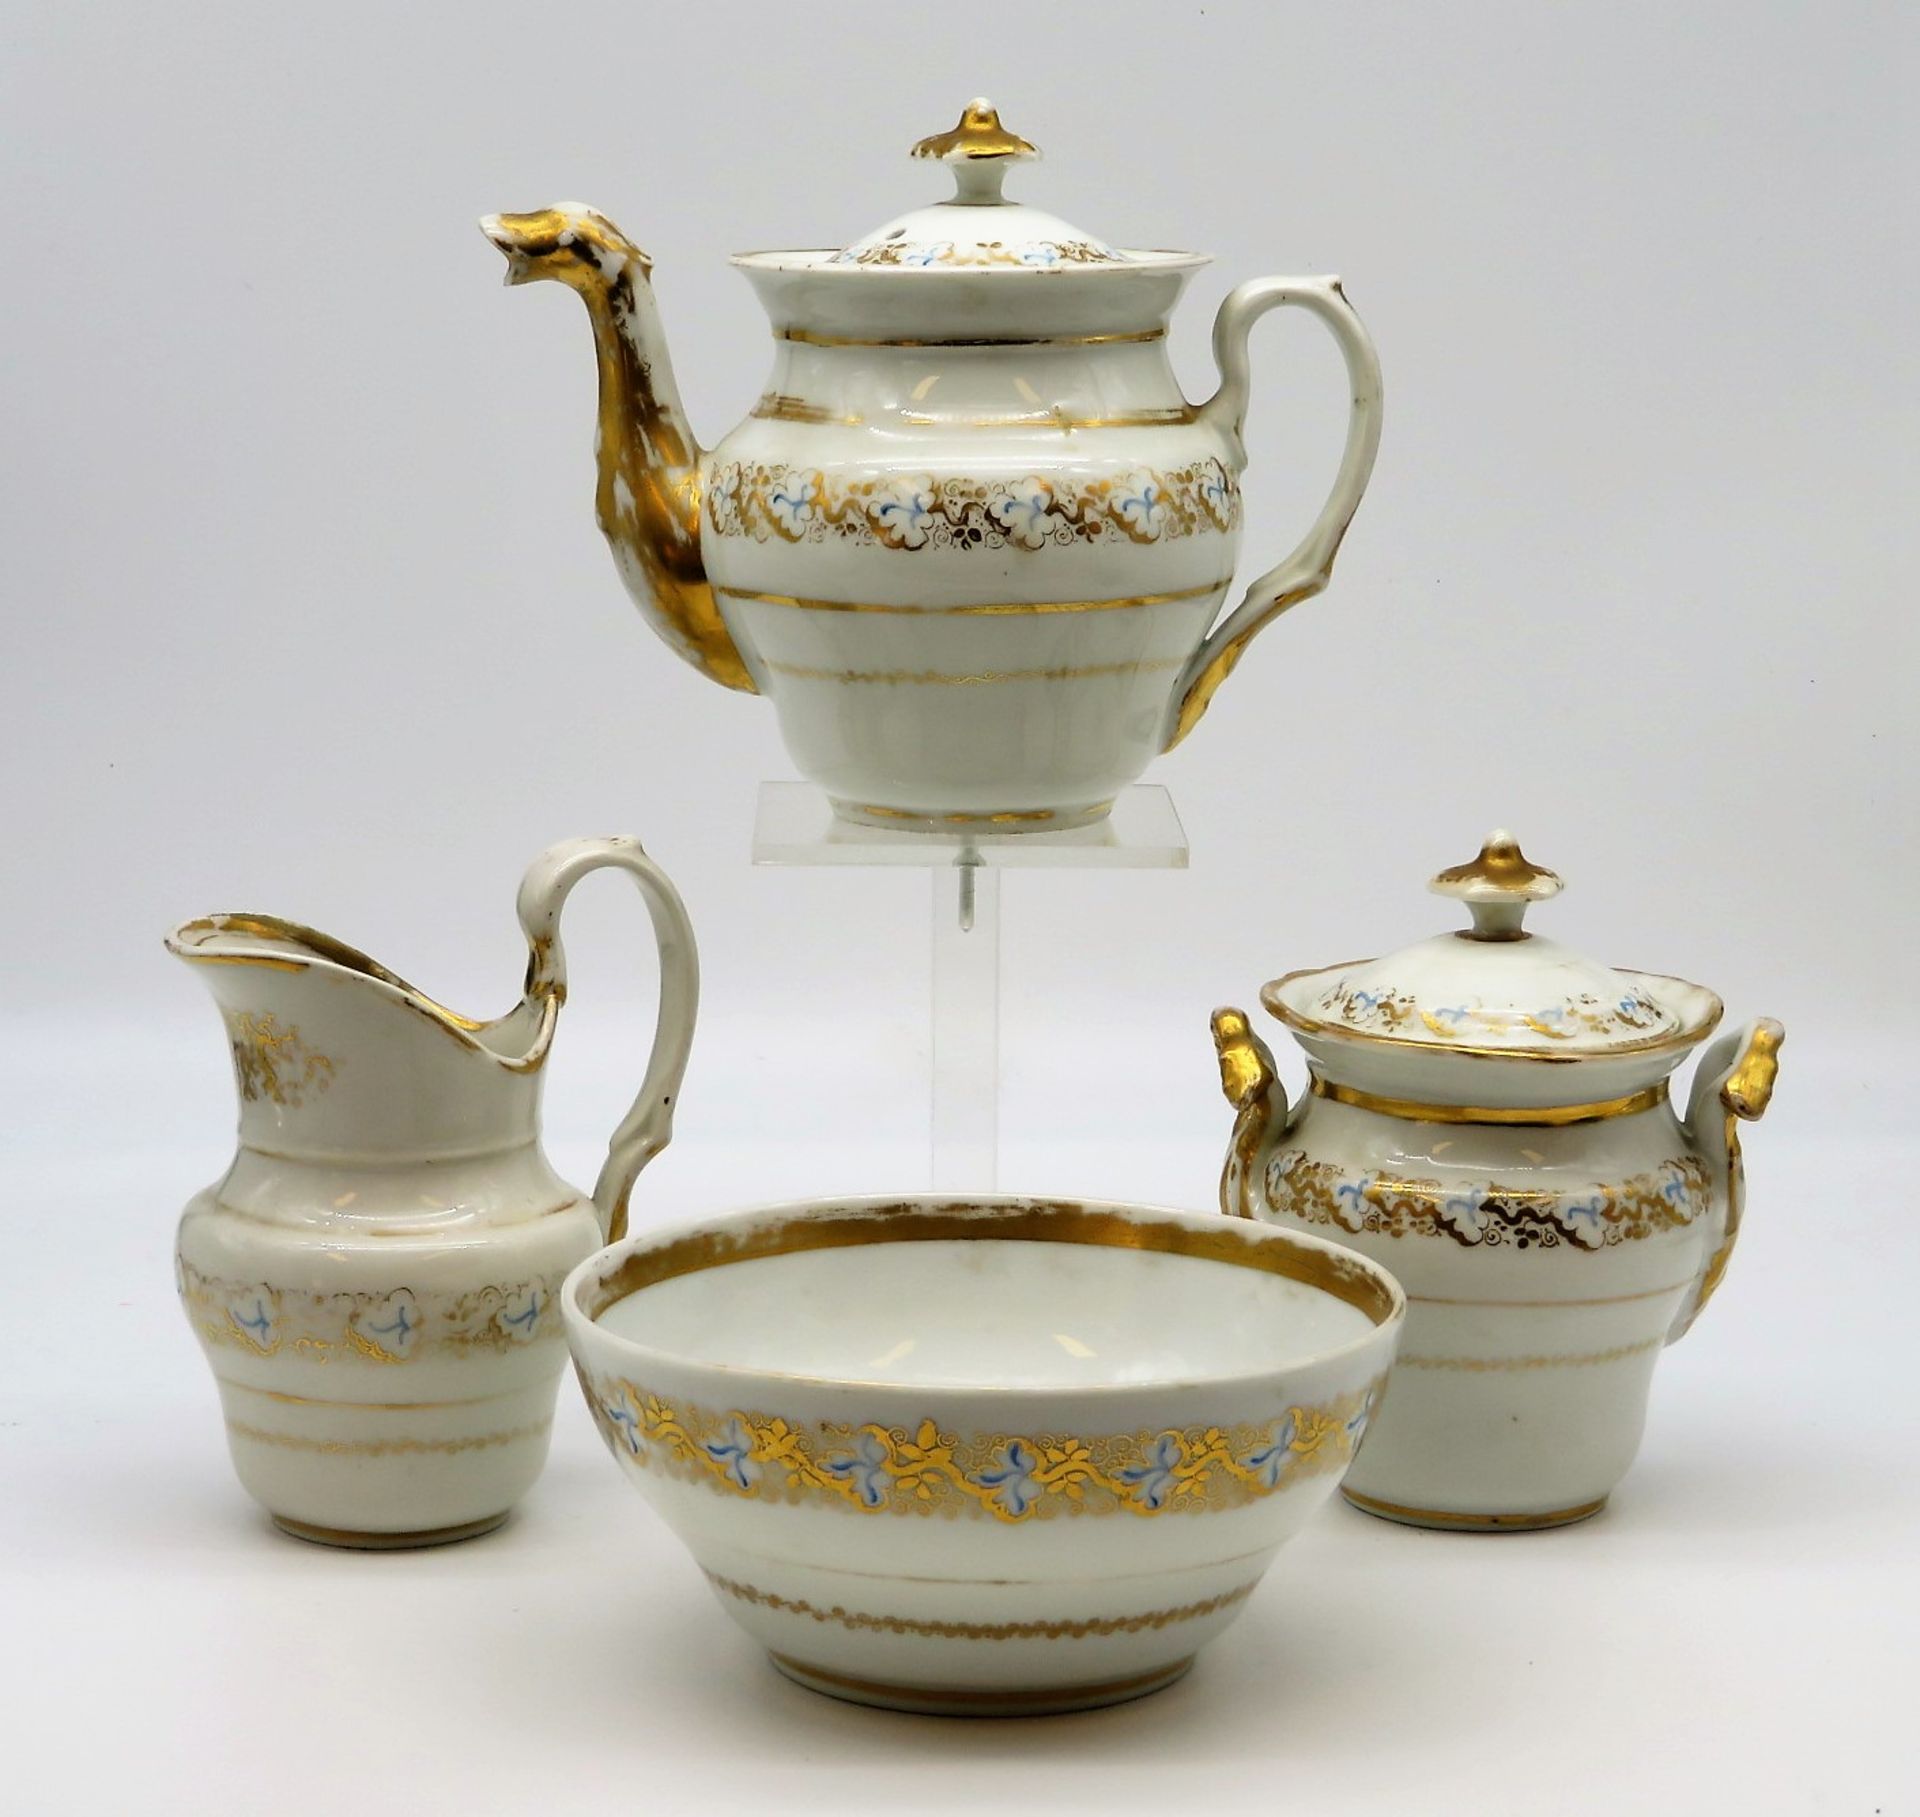 4 teiliges Teeservice, Biedermeier, 19. Jahrhundert, Weißporzellan mit Goldmalerei, Abrieb, Teerand